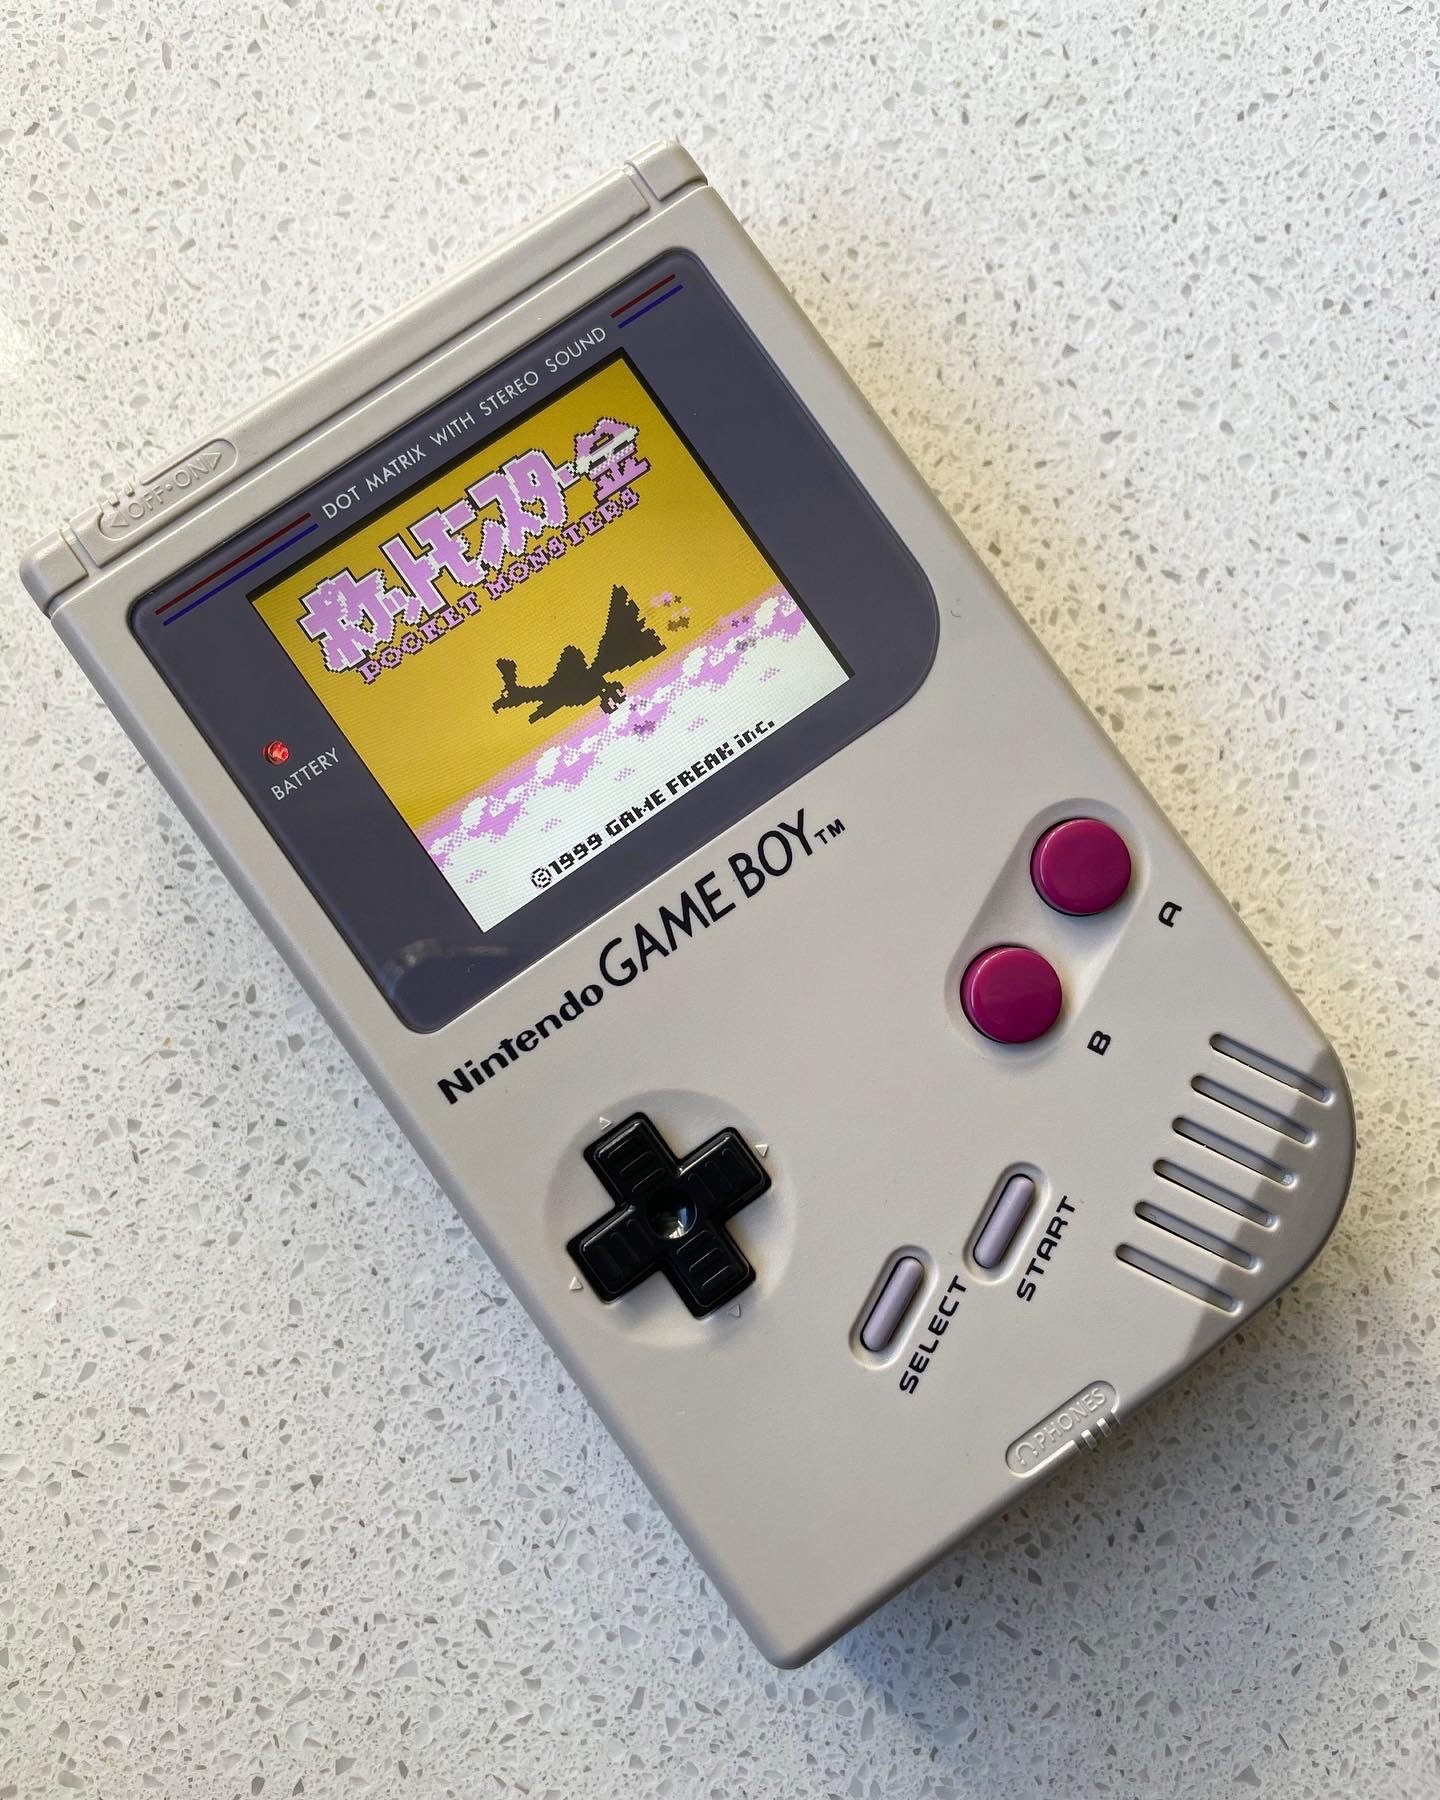 Estallar Bóveda interferencia Nintendo Gameboy DMG 01 Game Boy Backlit IPS V2 LCD off White - Etsy